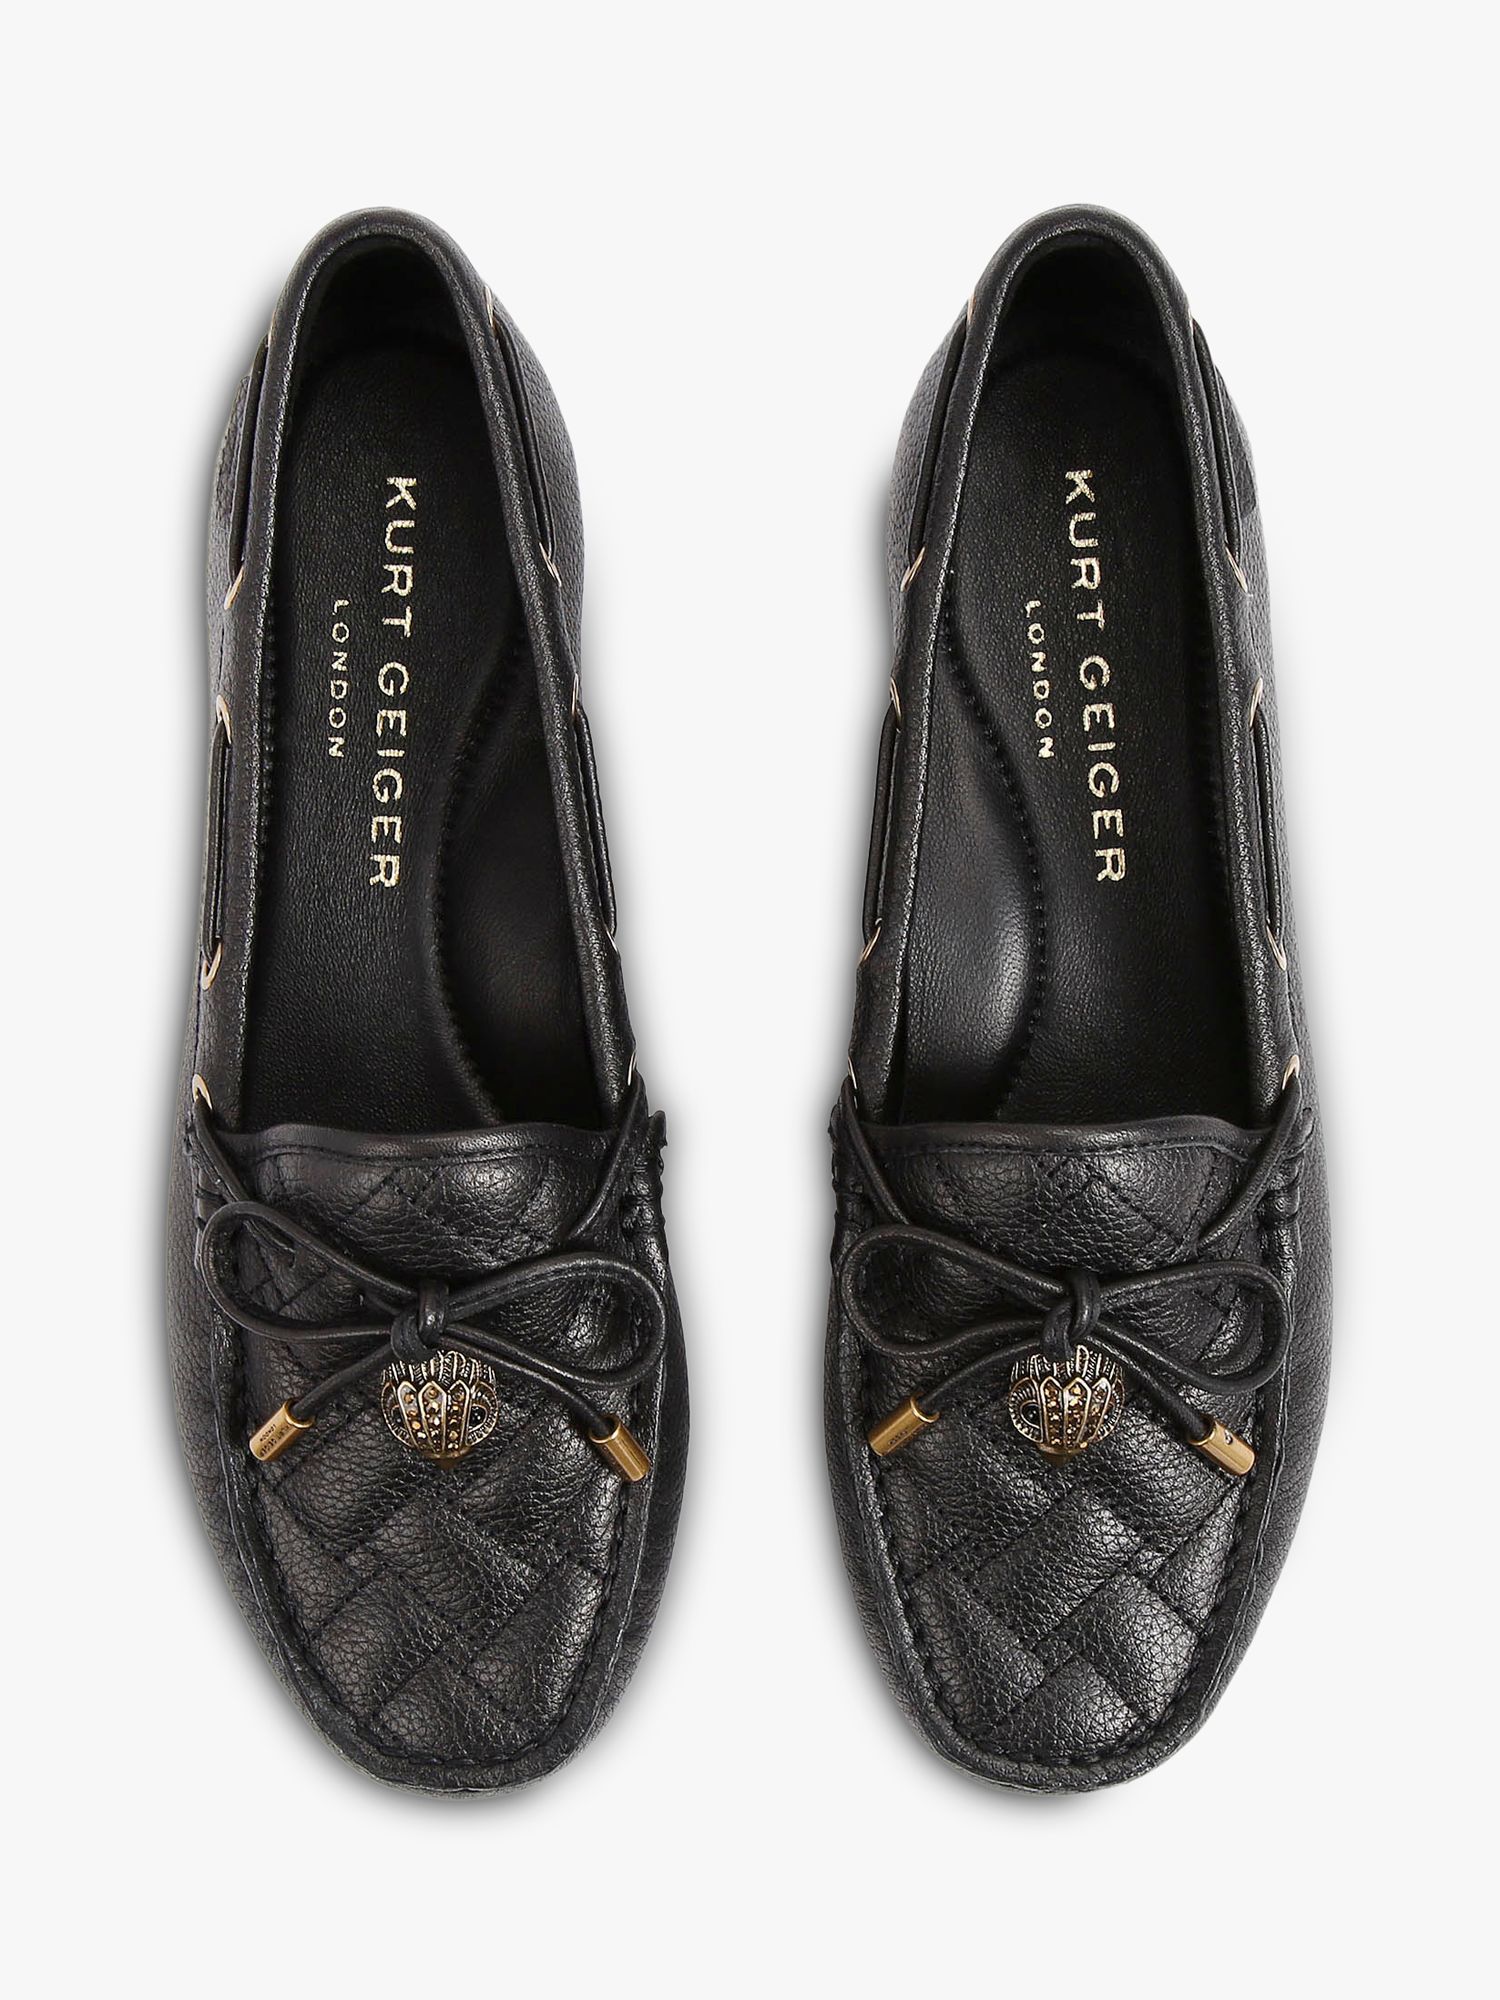 Kurt Geiger London Eagle Leather Loafers, Black at John Lewis & Partners